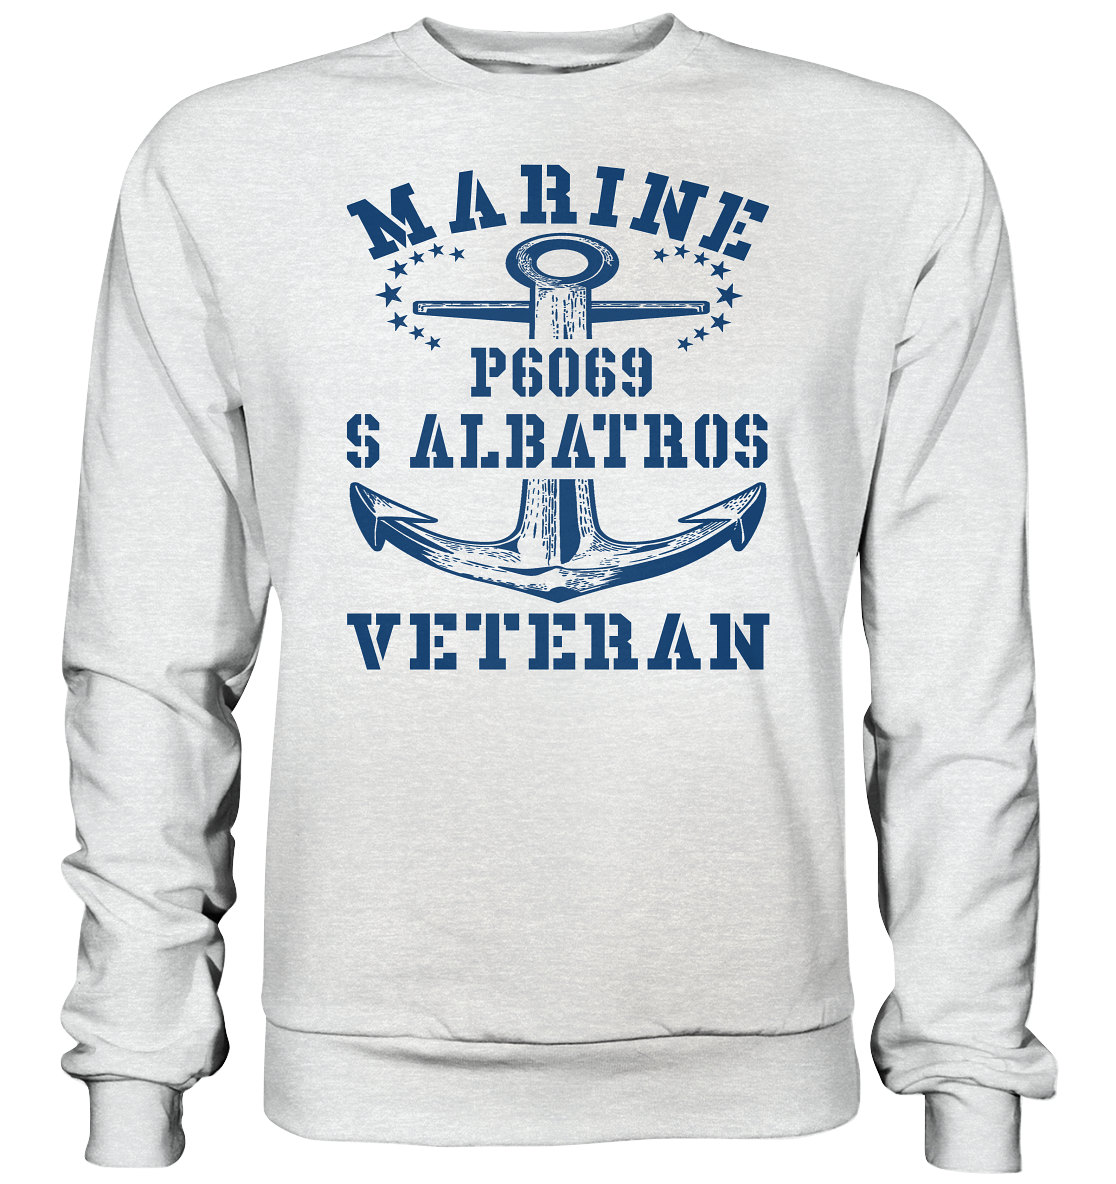 P6069 S ALBATROS Marine Veteran - Premium Sweatshirt